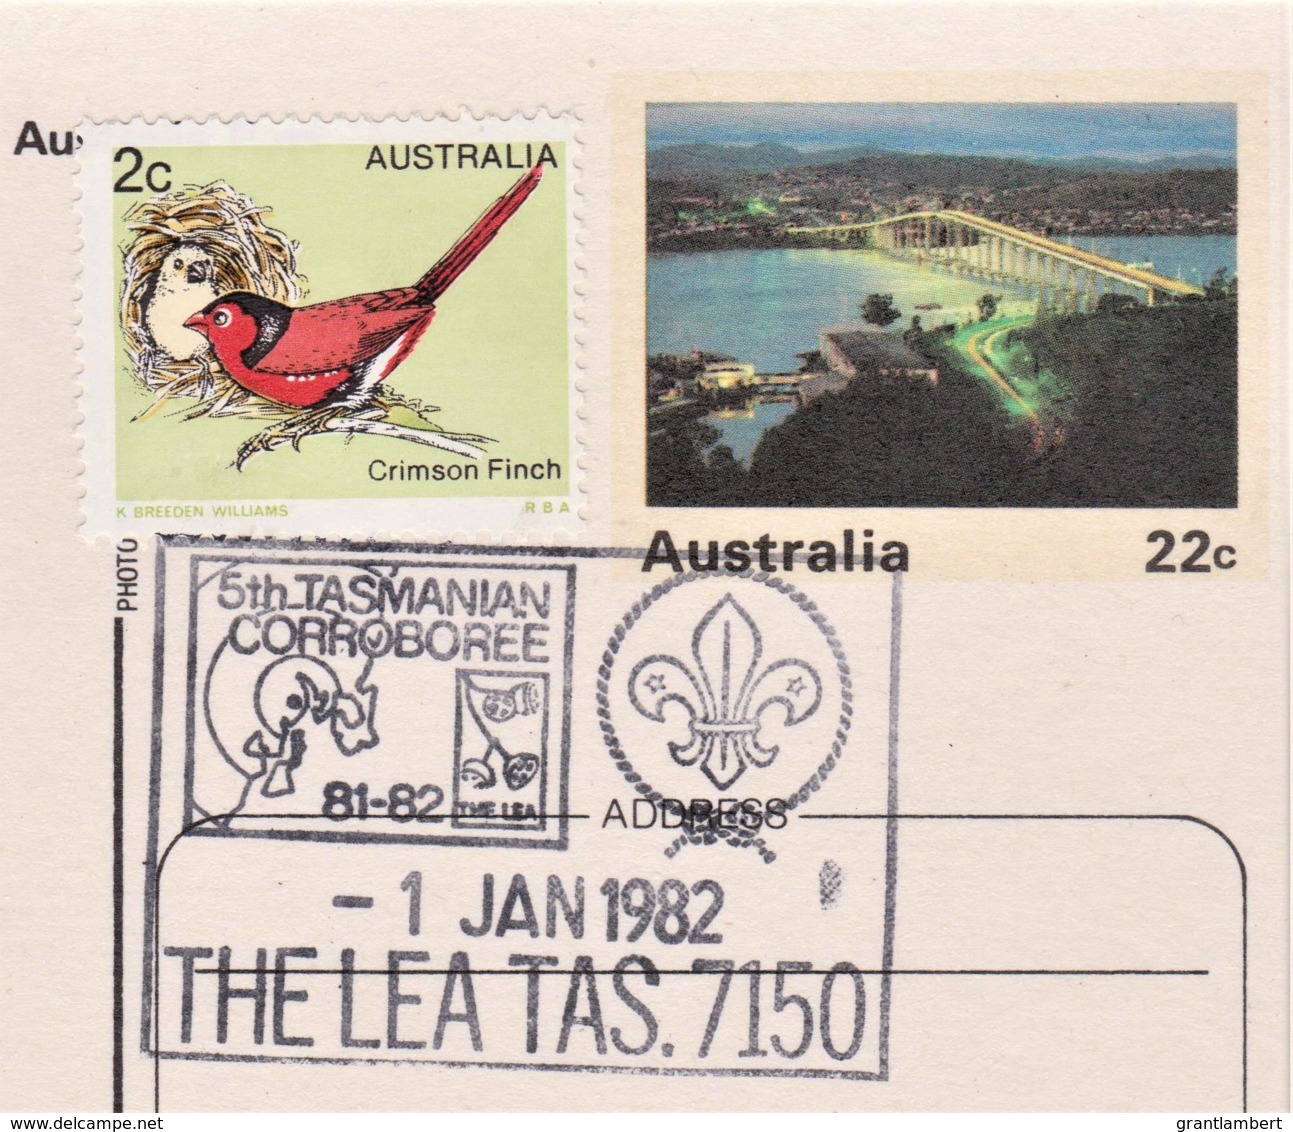 Tasman Bridge By Night, Hobart, Tasmania - 5th Tasmanian Corroboree Postmark, 1982 - Hobart